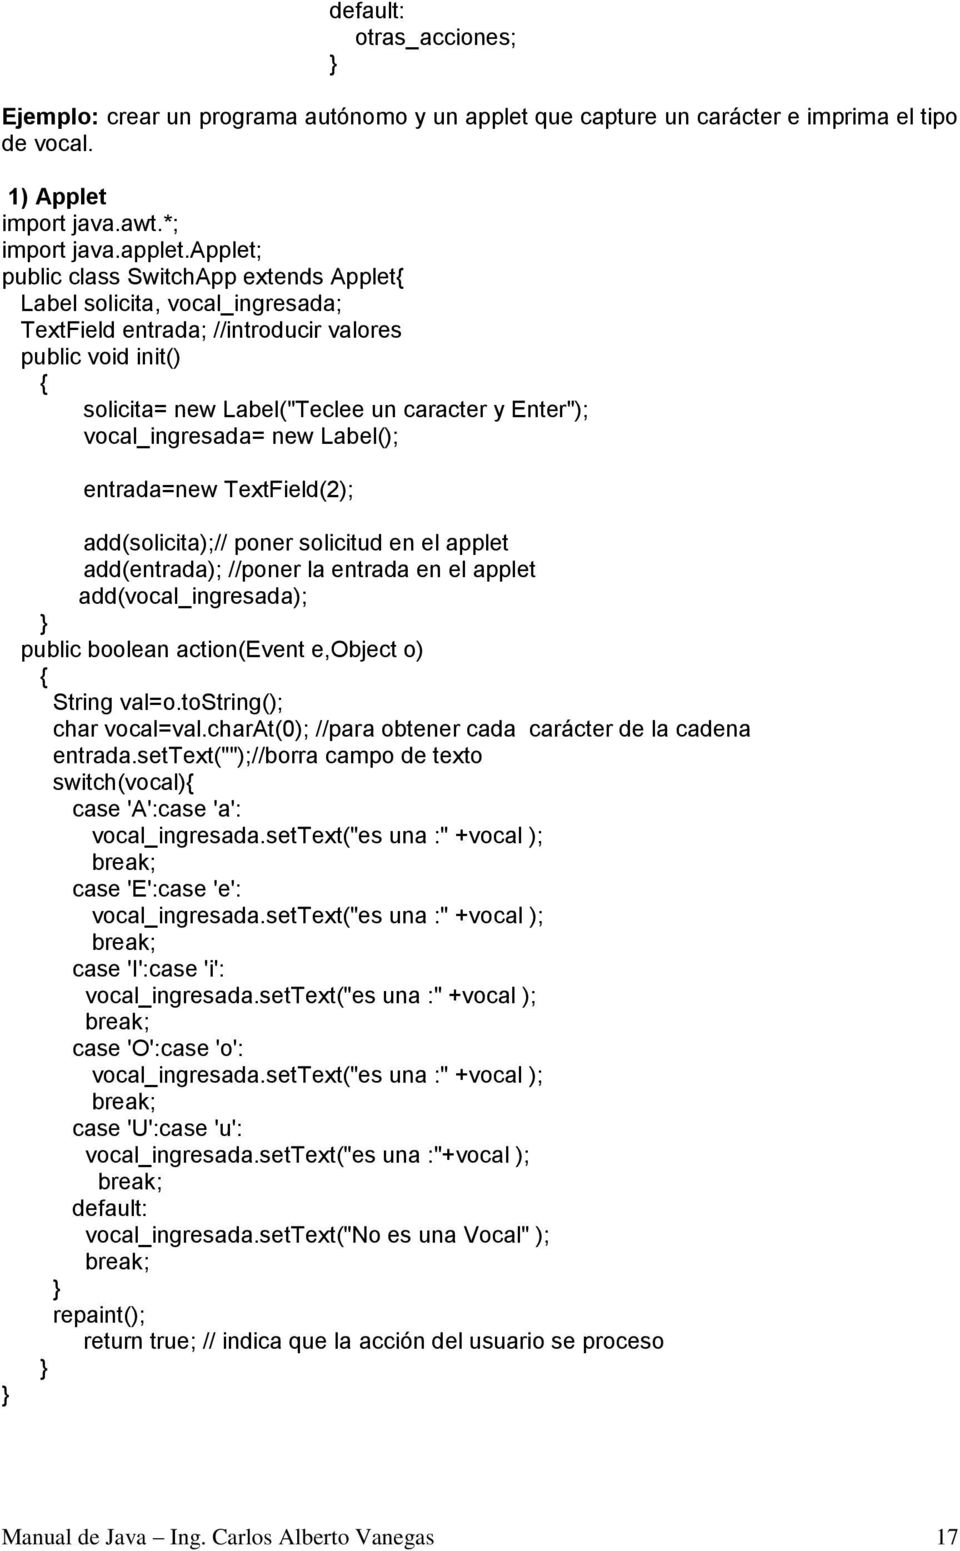 applet; public class SwitchApp extends Applet Label solicita, vocal_ingresada; TextField entrada; //introducir valores public void init() solicita= new Label("Teclee un caracter y Enter");